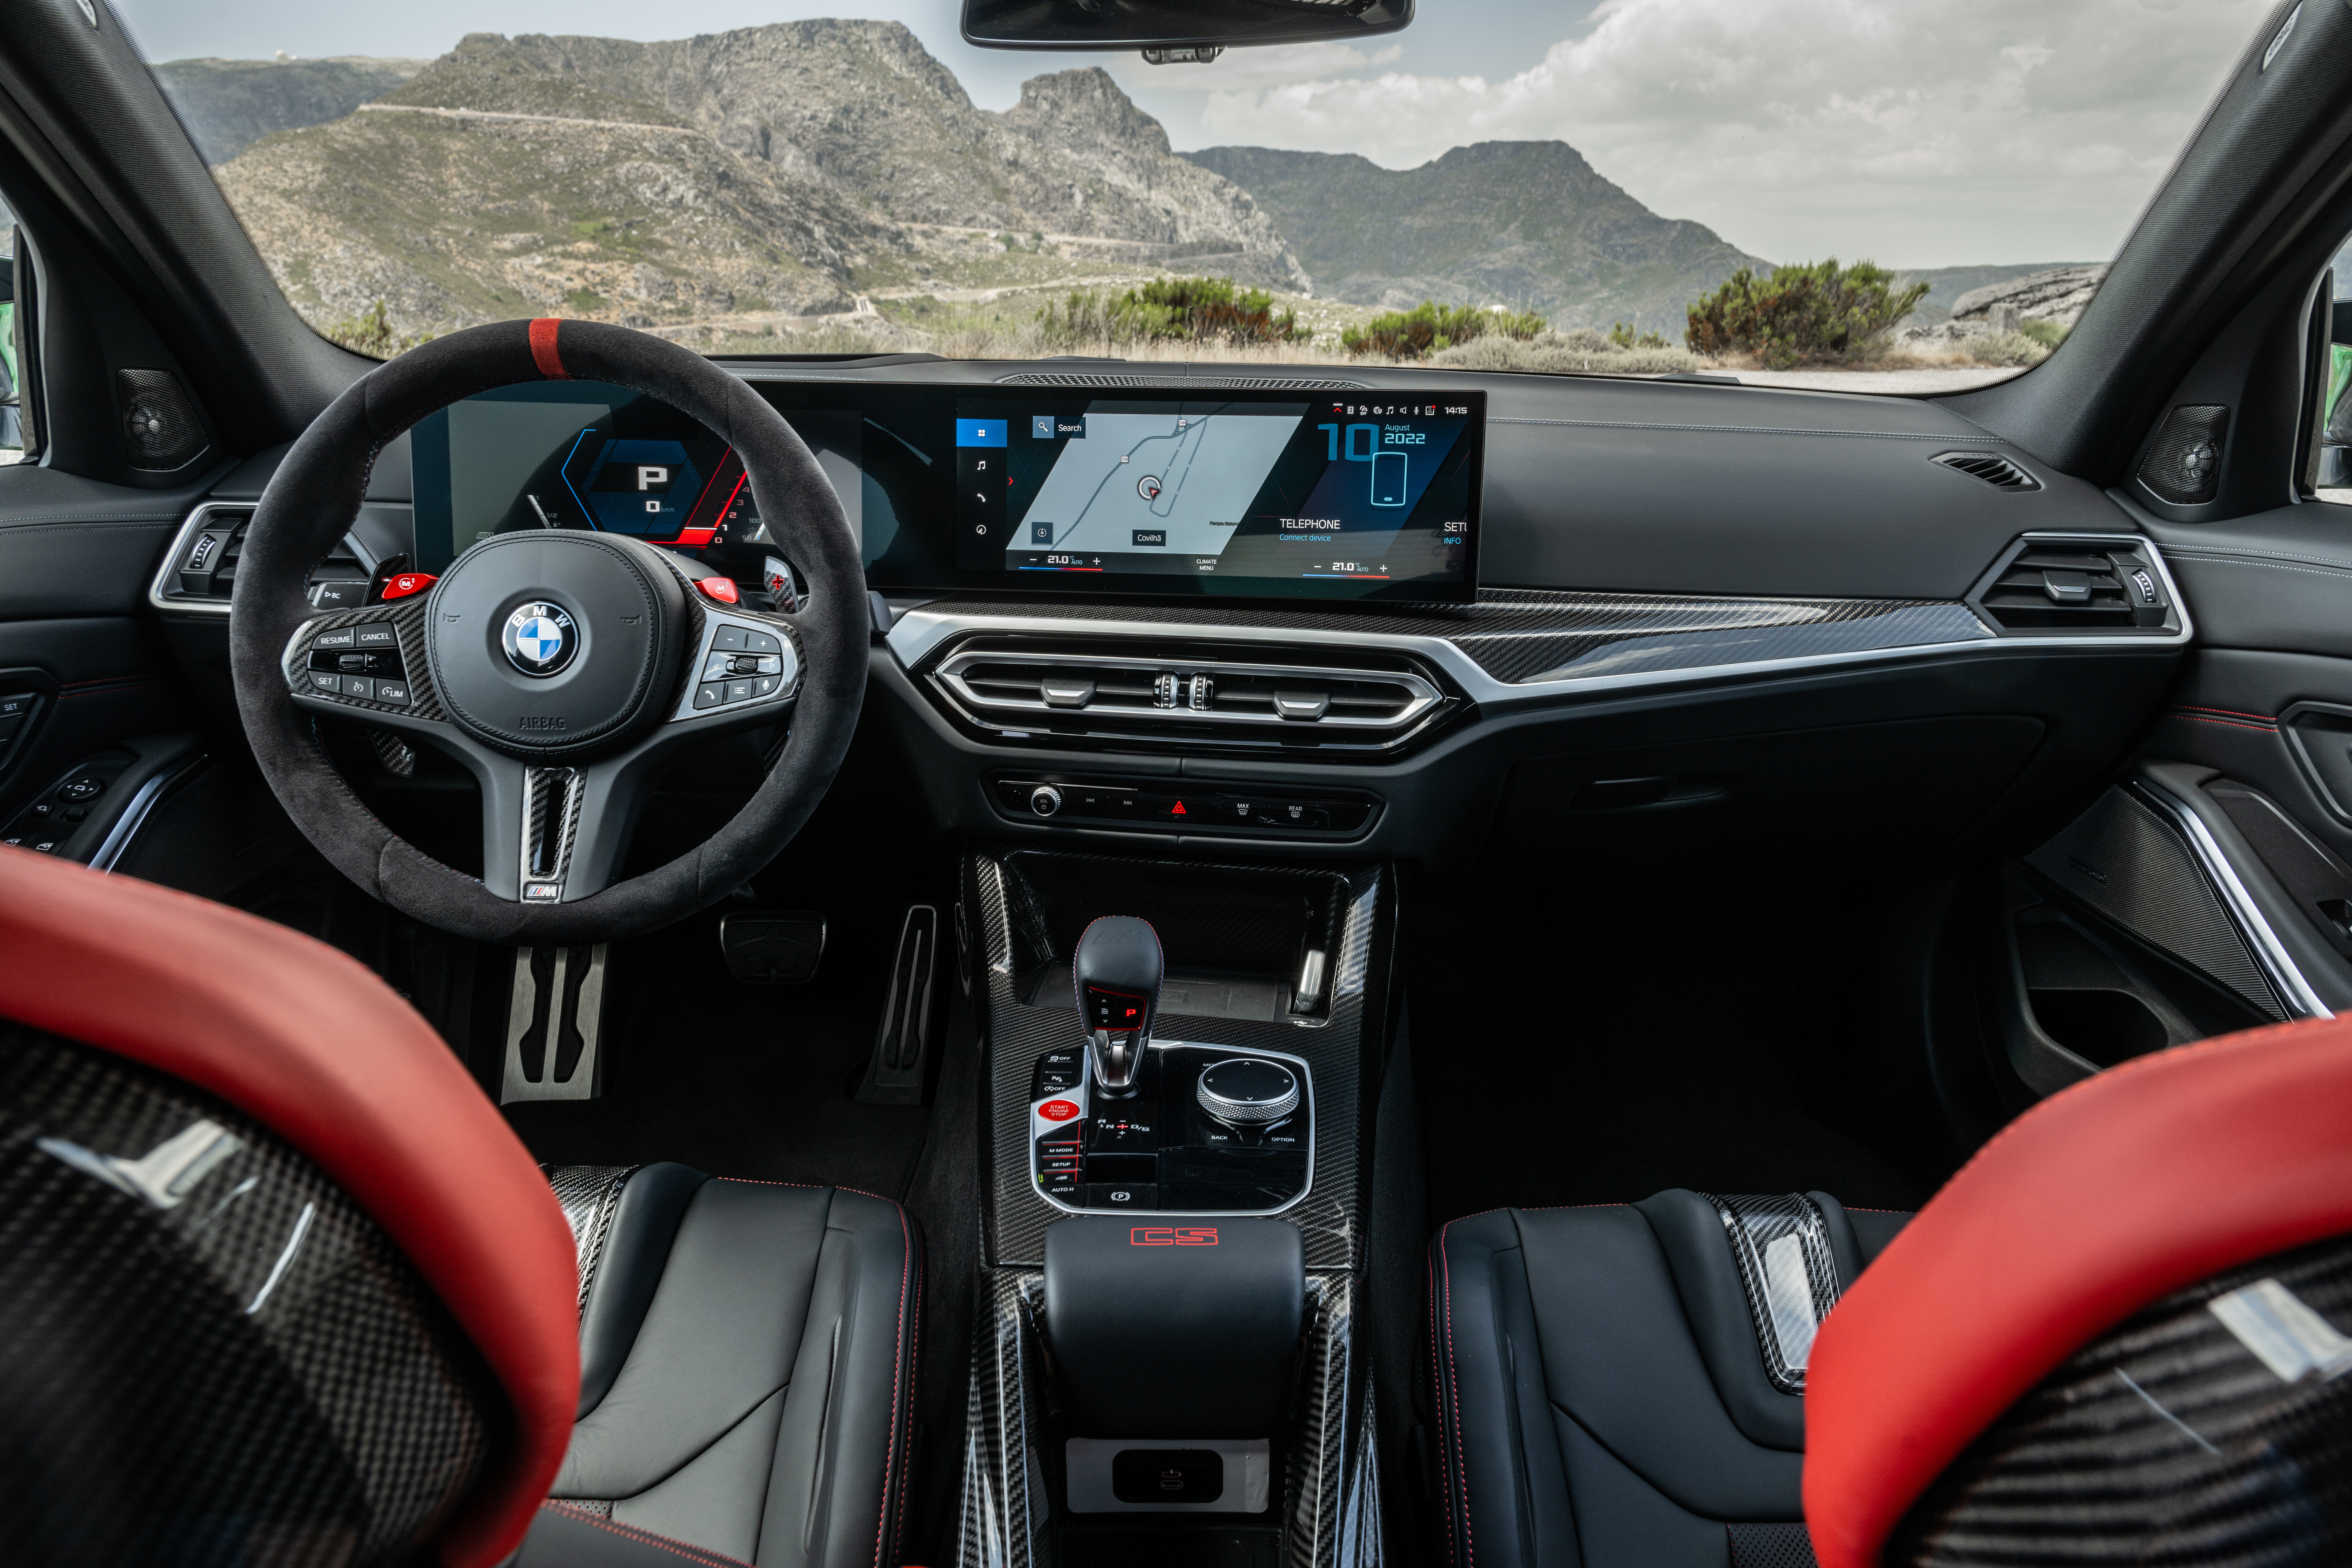 General 8055x5370 BMW M3  car BMW BMW 3 Series vehicle car interior interior steering wheel Portugal